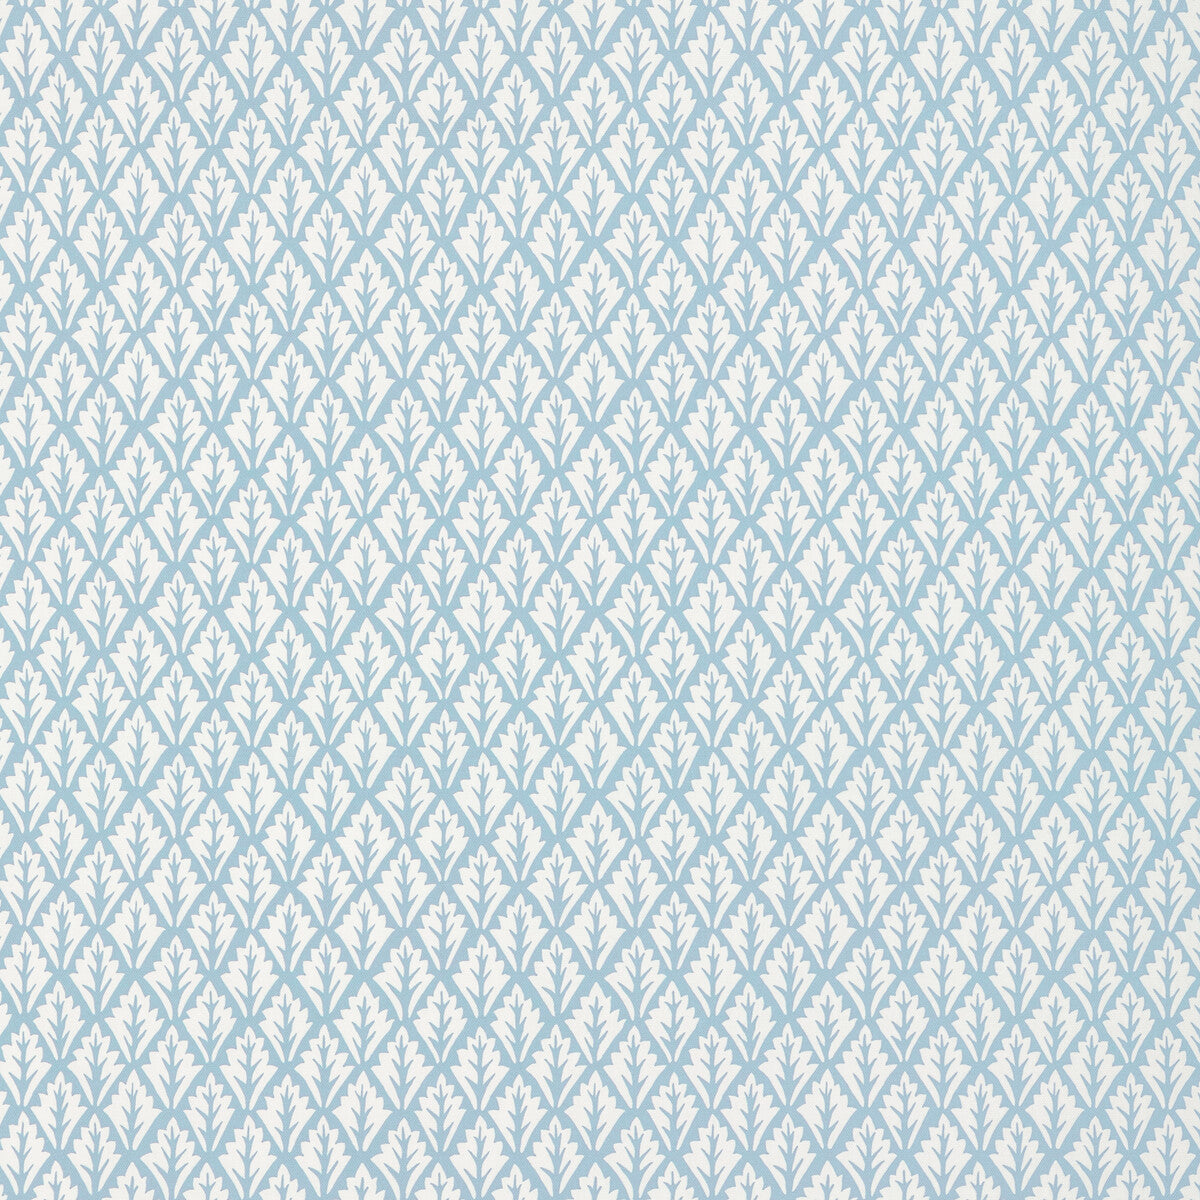 Dorso fabric in water color - pattern DORSO.52.0 - by Kravet Basics